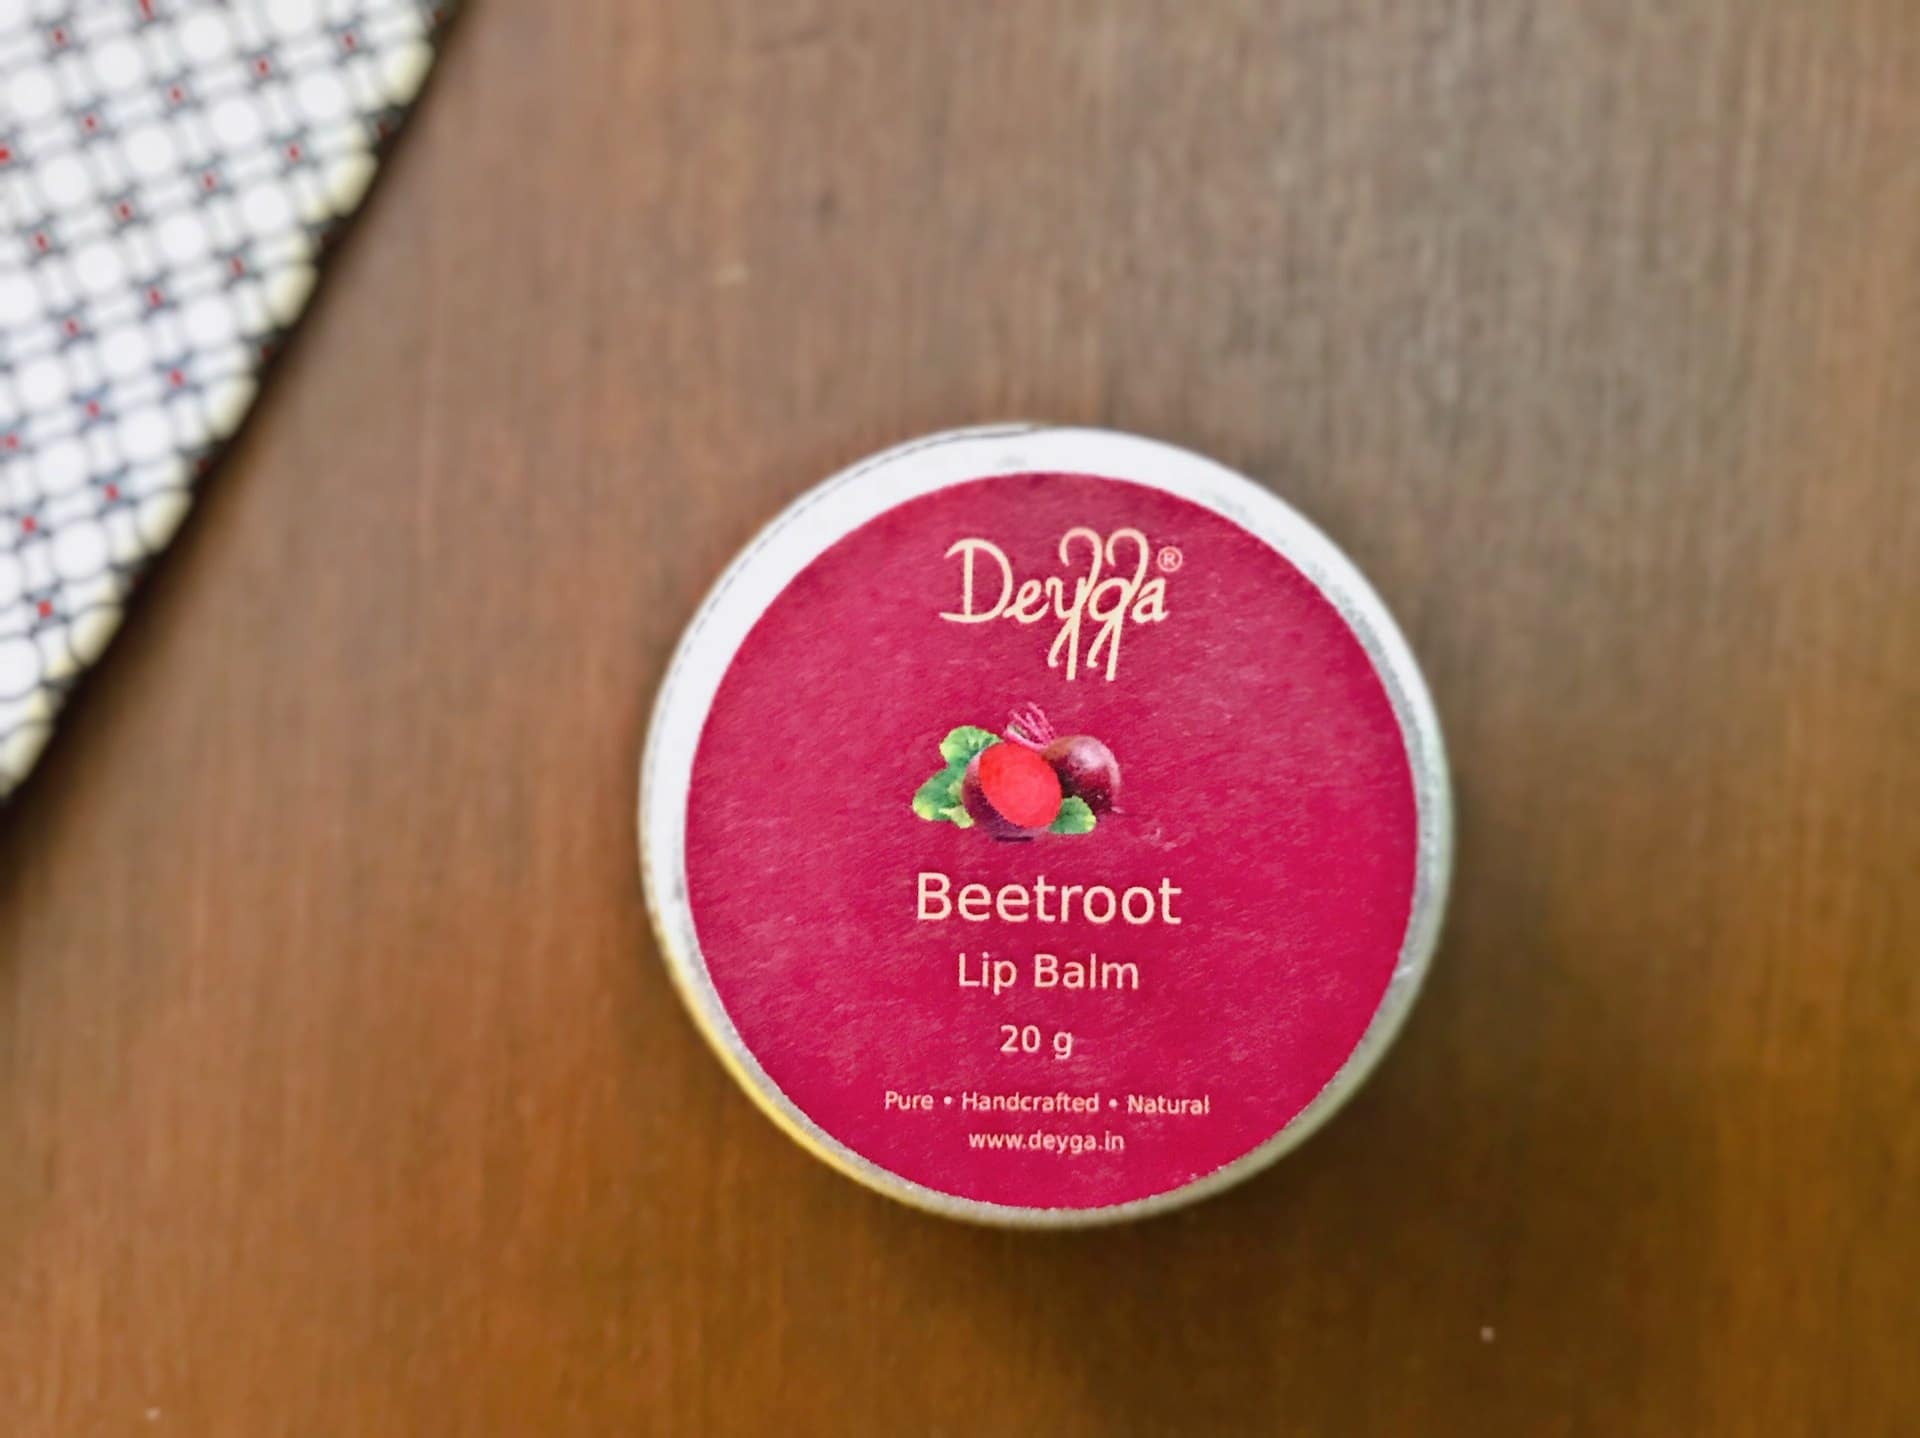 Deyga Beetroot Lip Balm Review